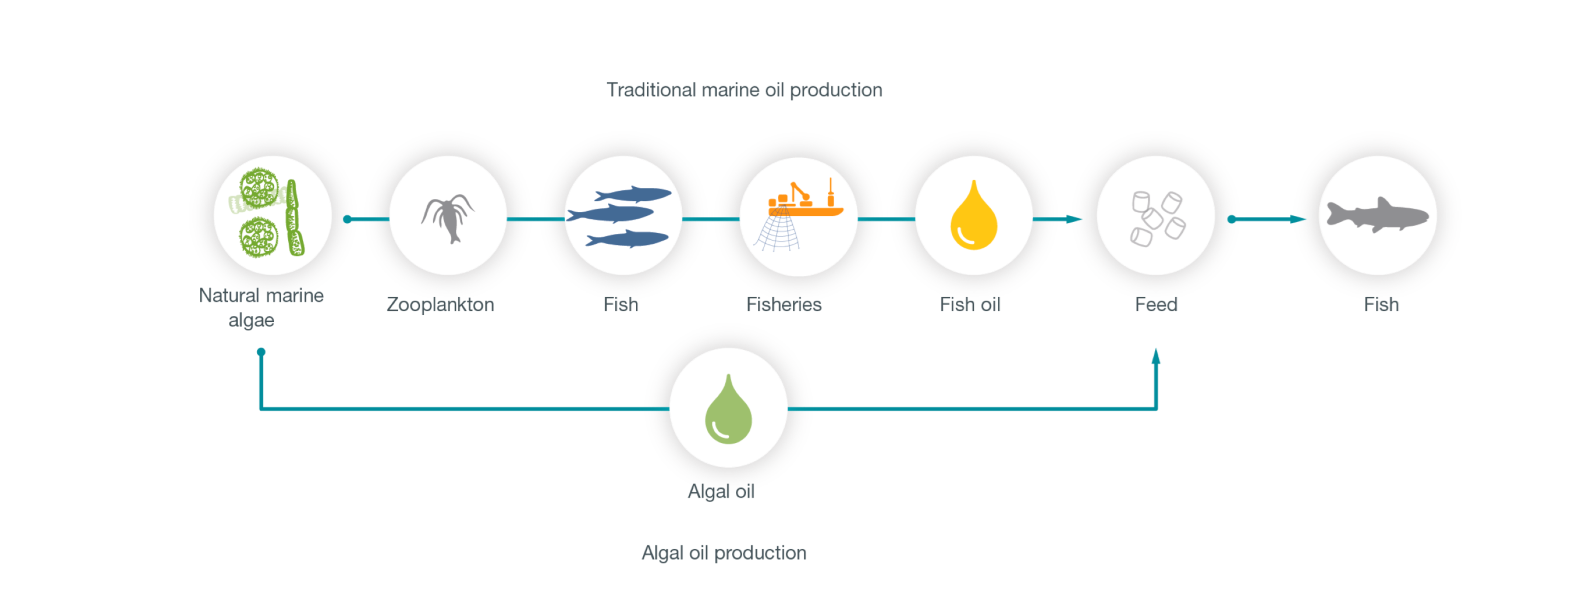 Algal oil production figure